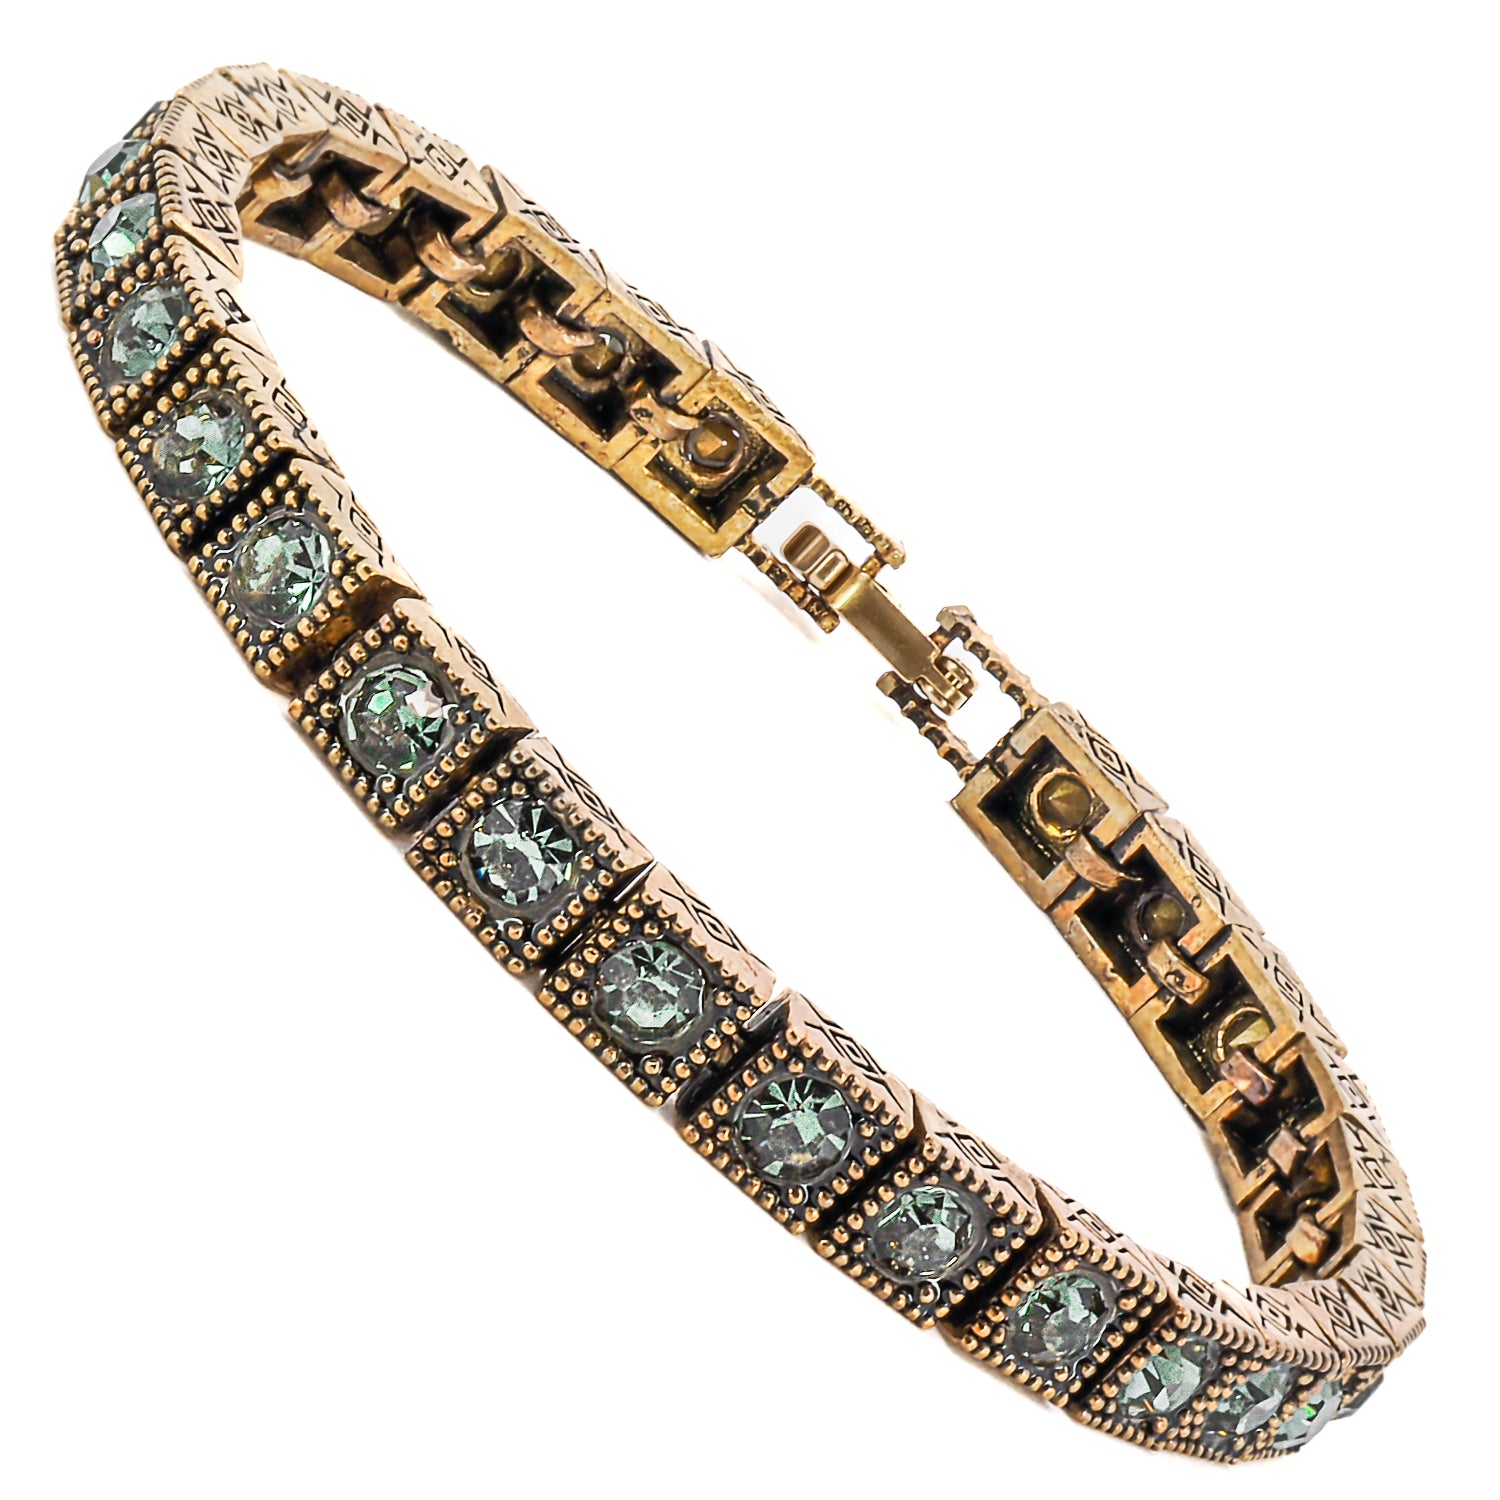 A stunning bronze tennis bracelet adorned with vibrant green Swarovski crystals.